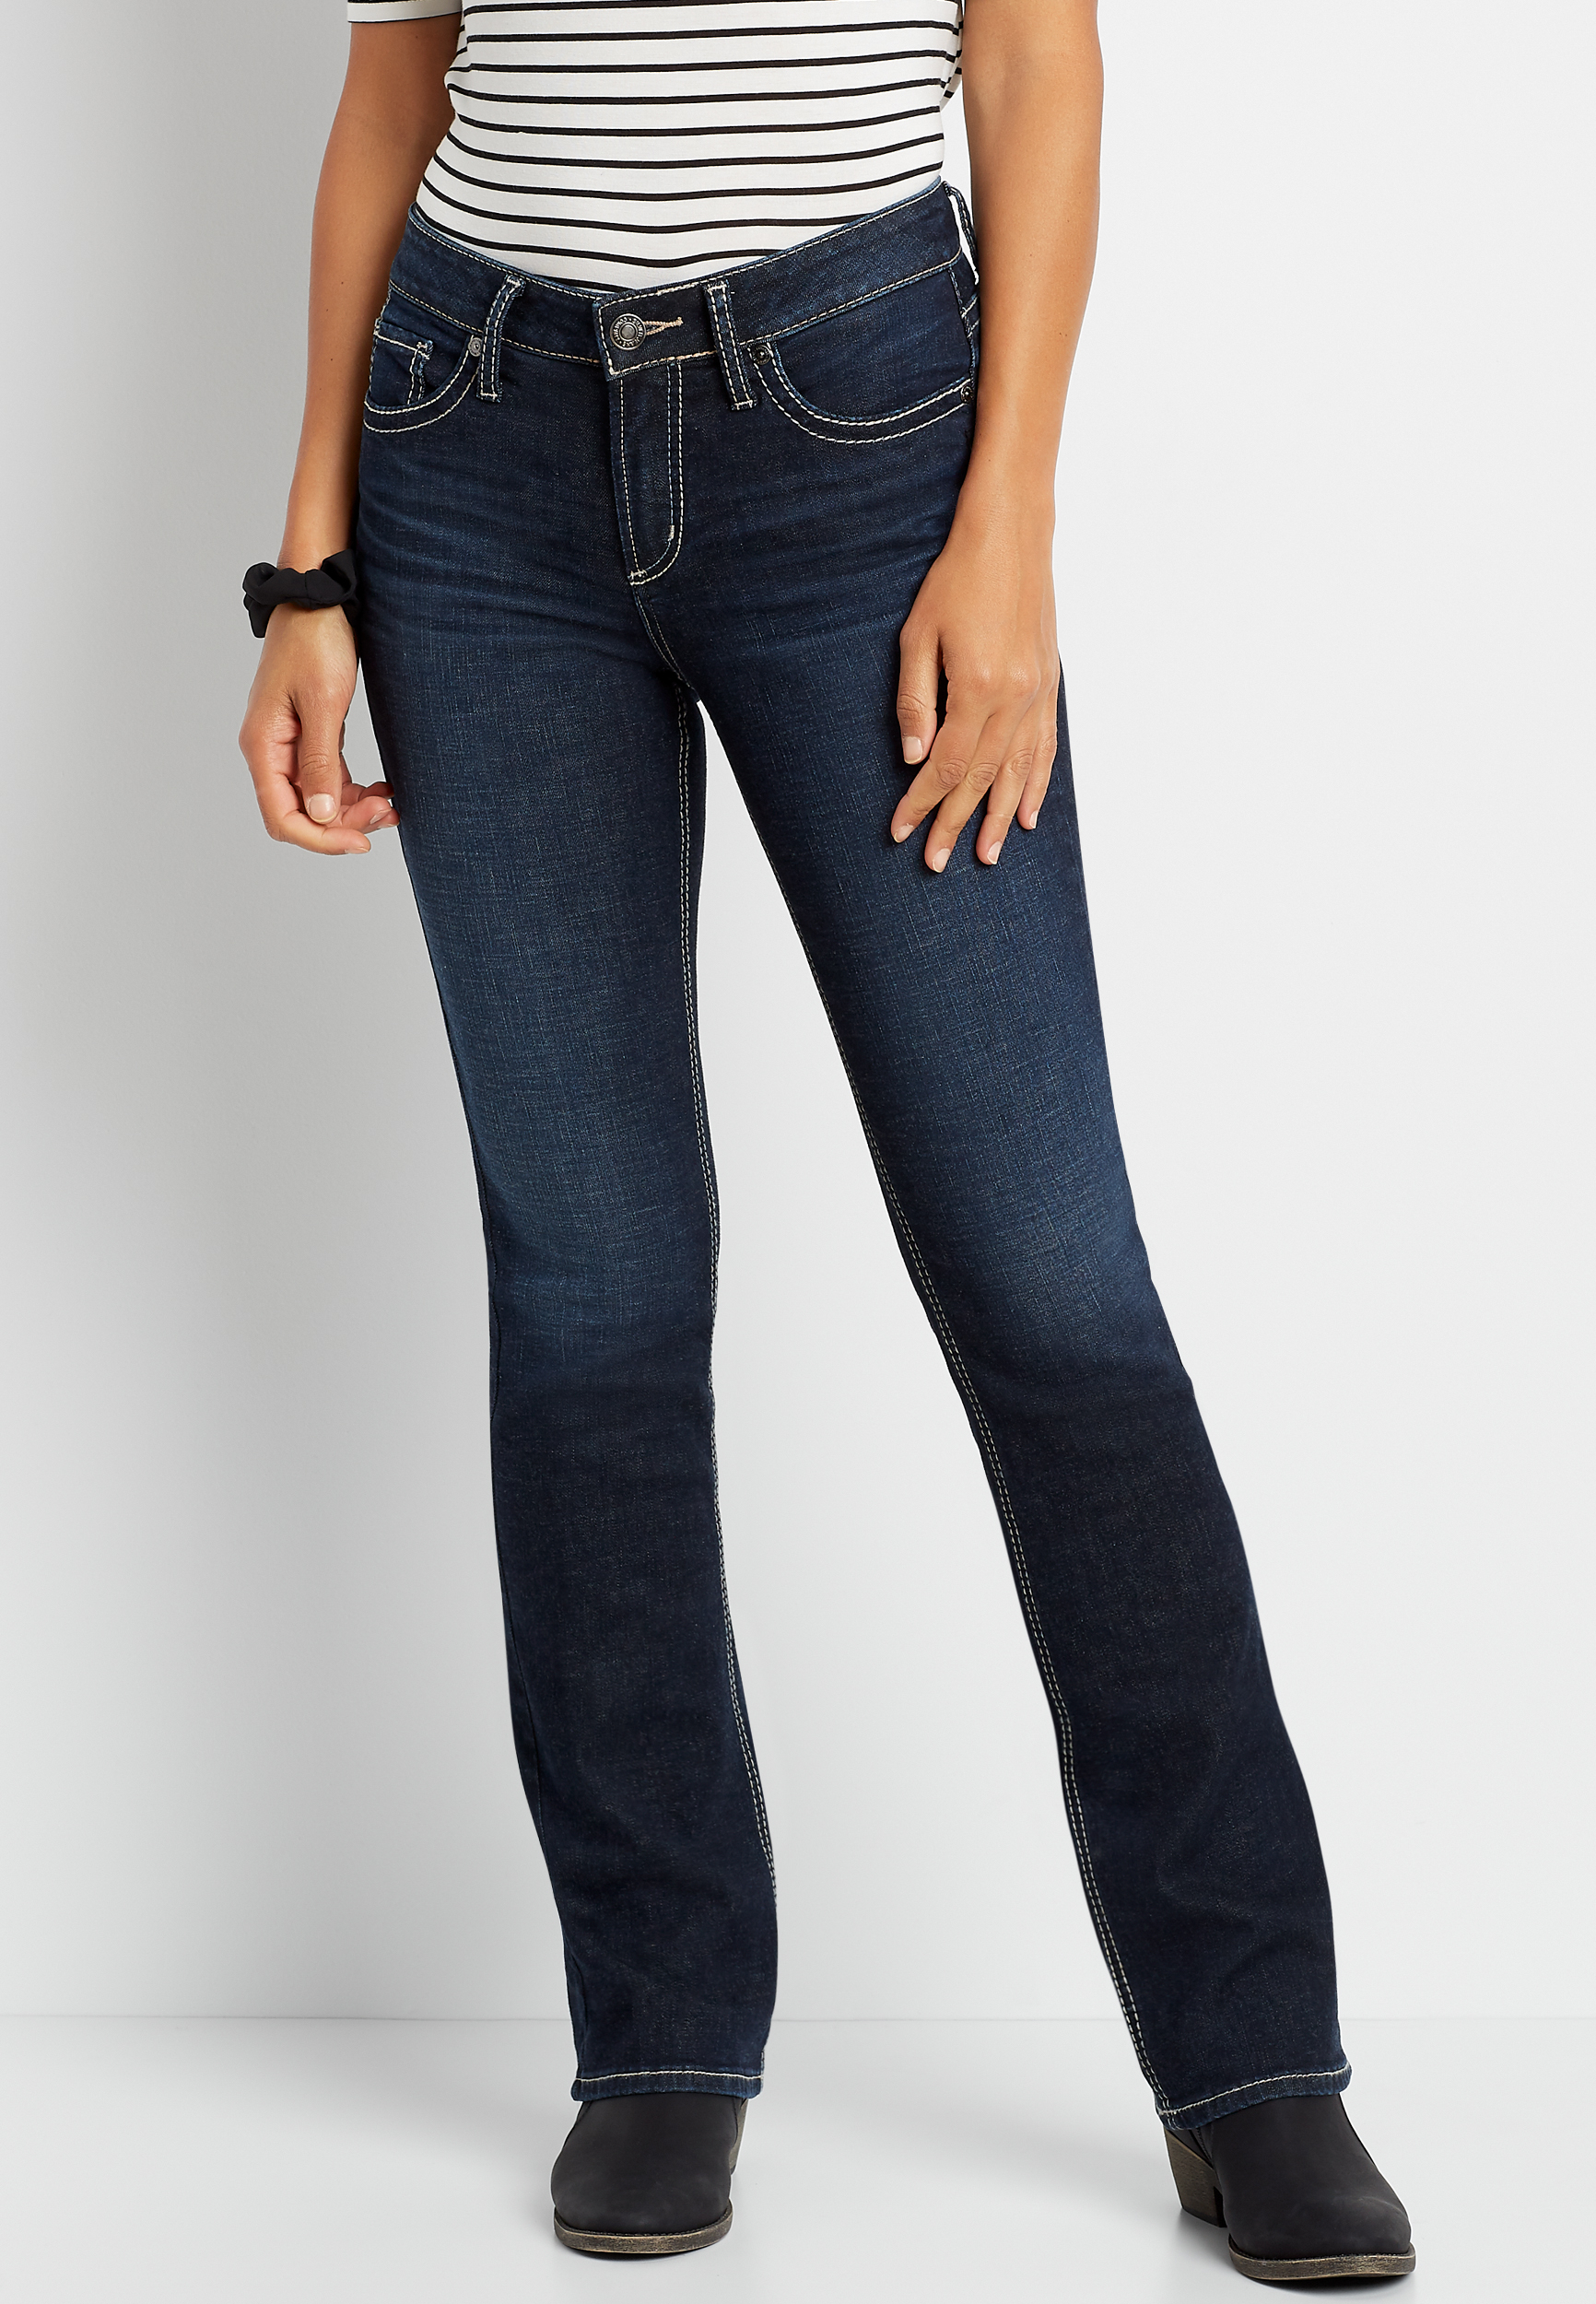 silver jeans on sale online